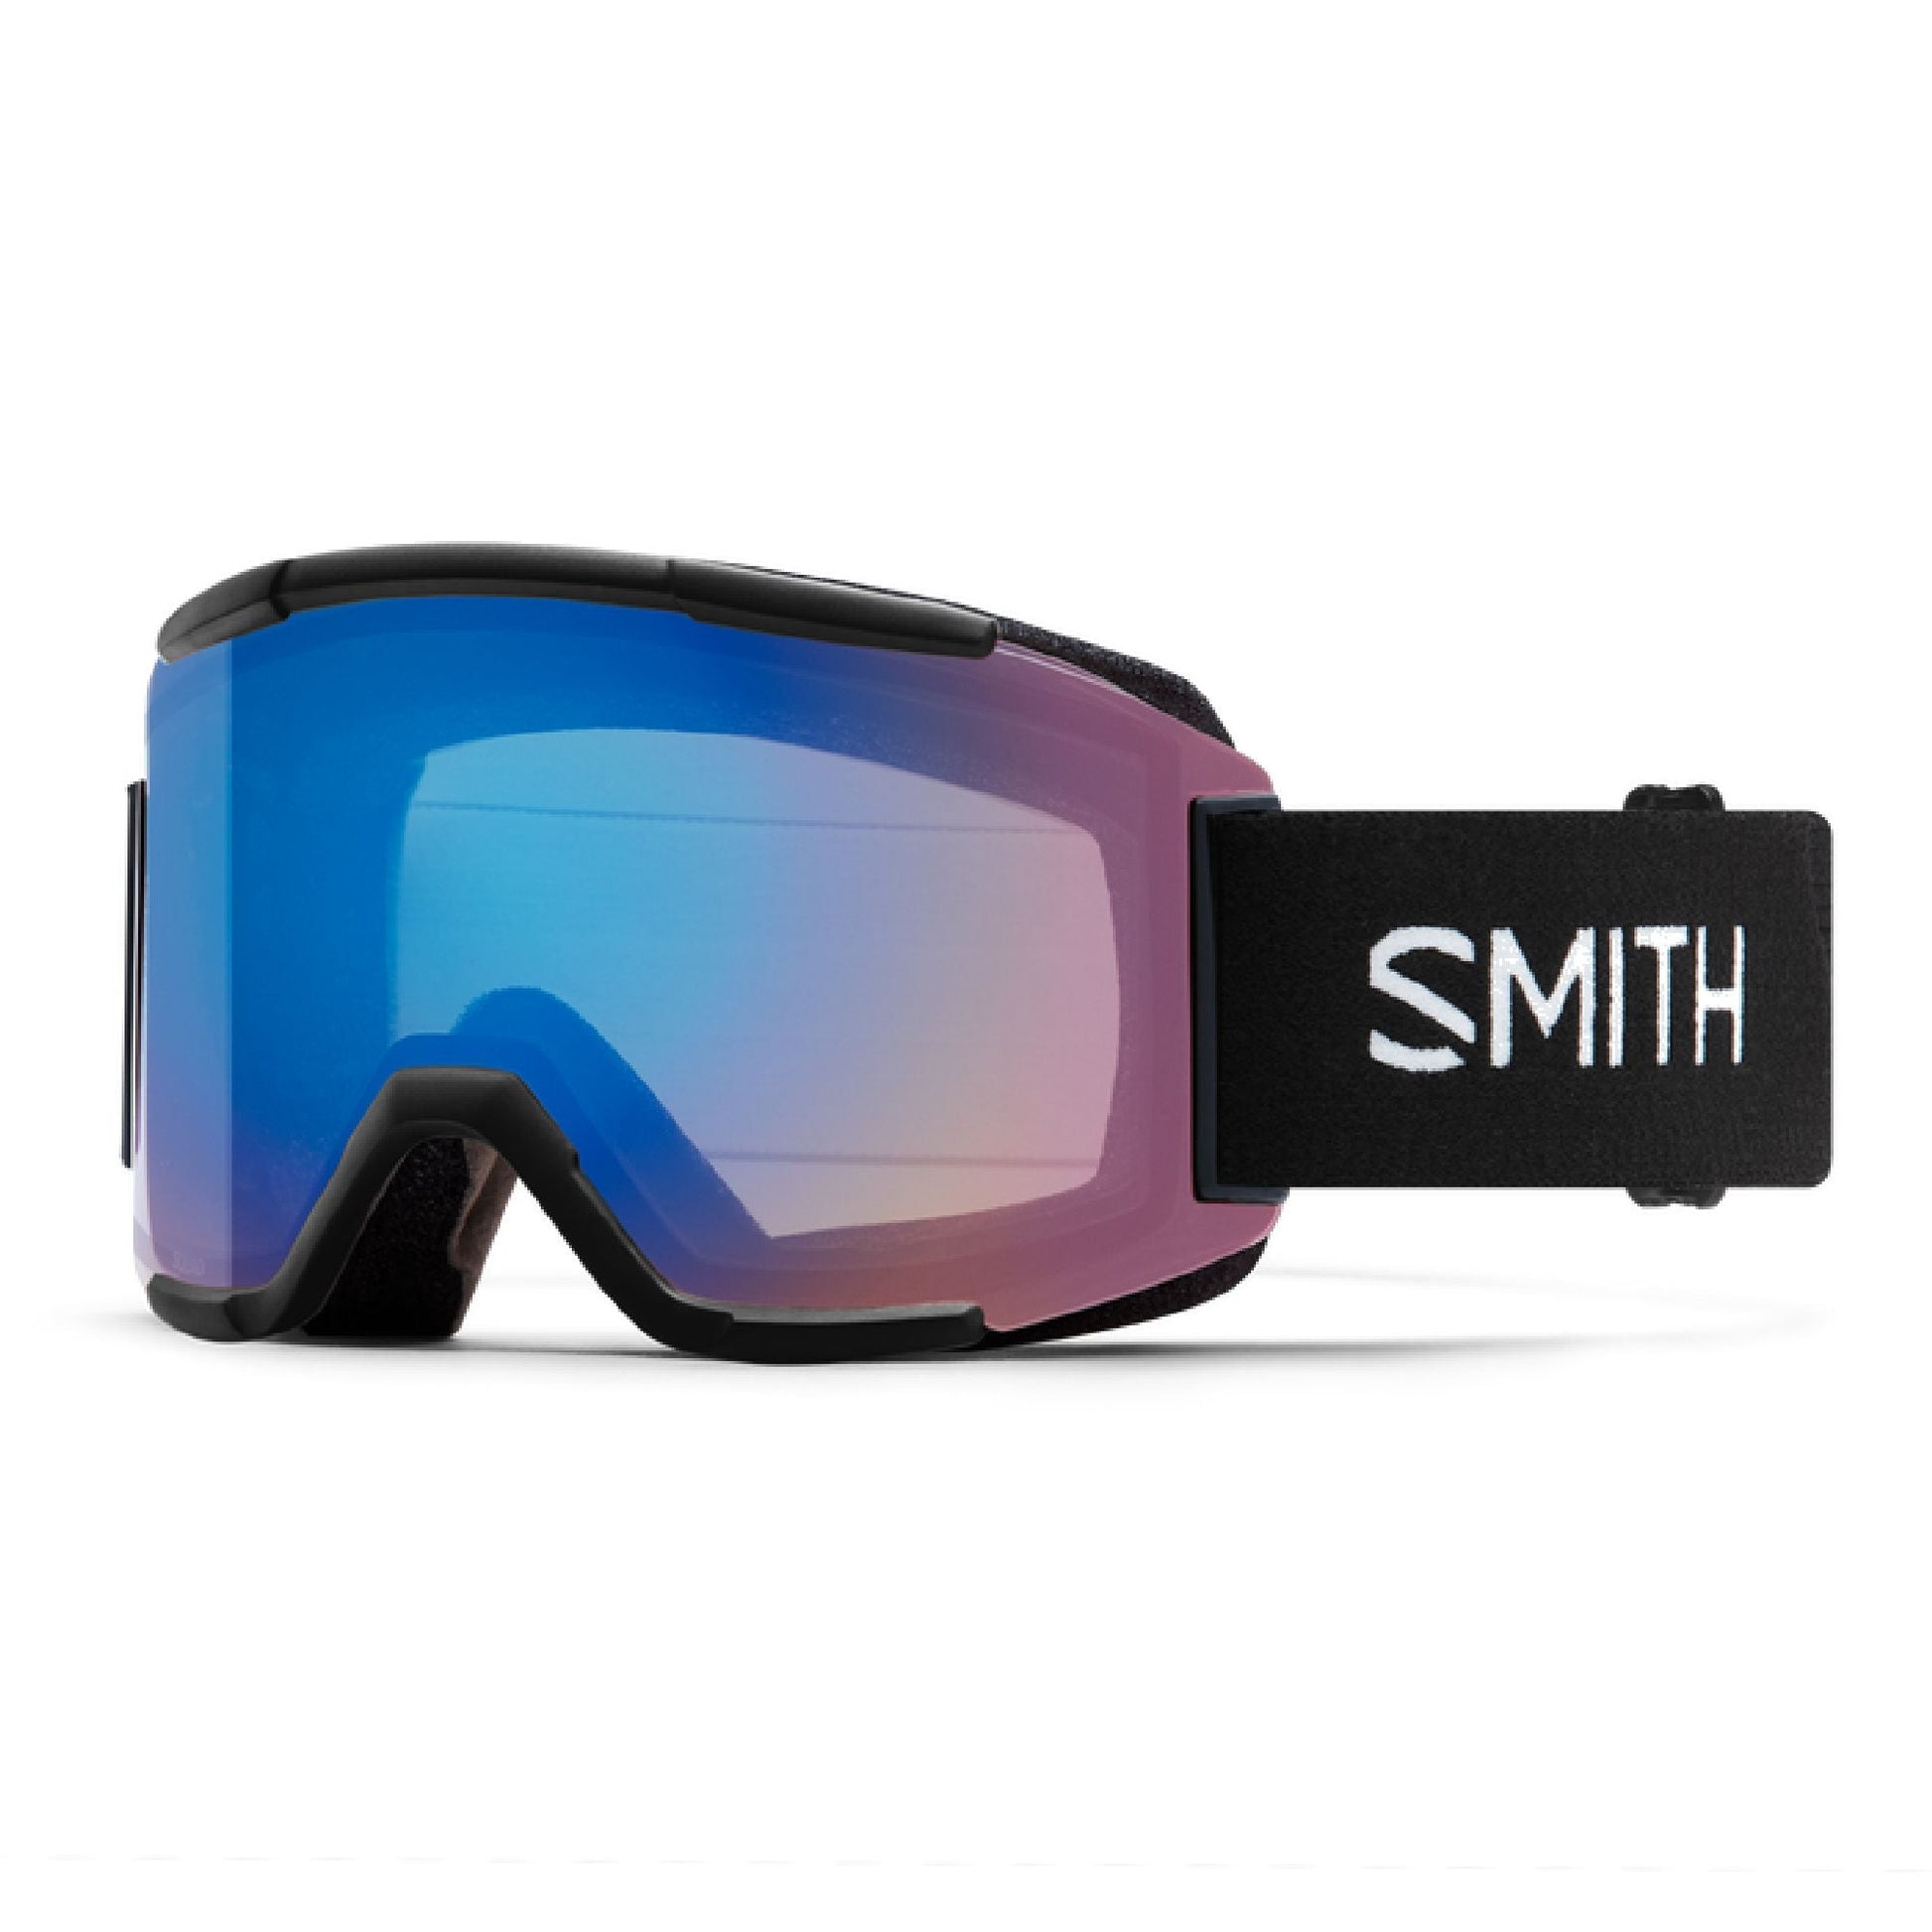 Smith Squad Snow Goggle - Openbox Black ChromaPop Storm Rose Flash Snow Goggles